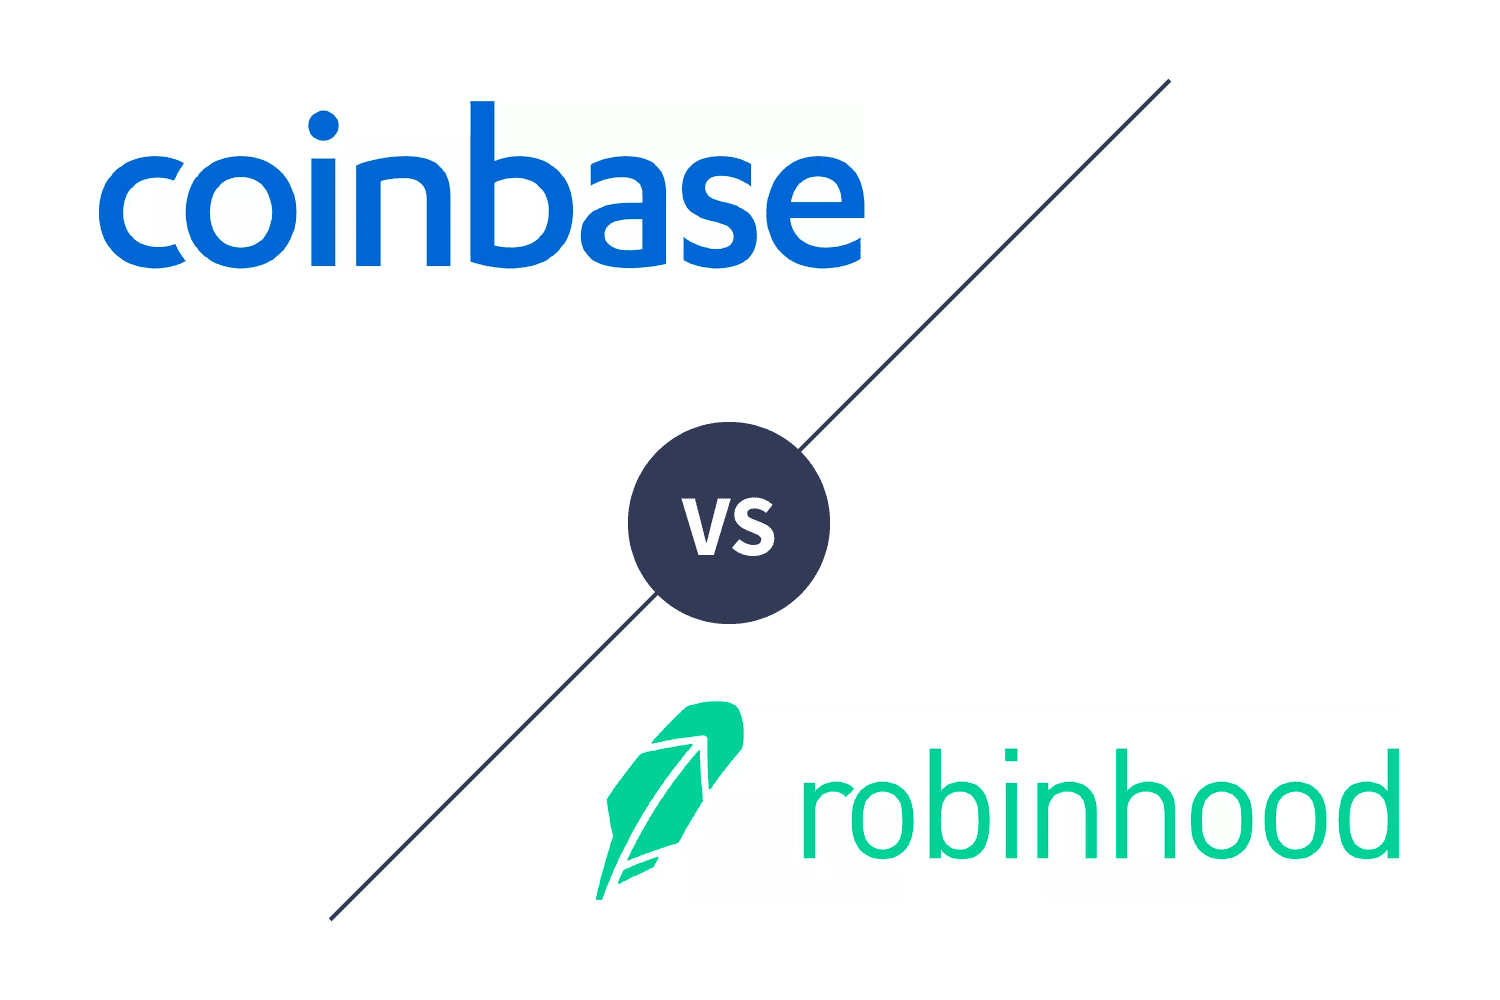 is robinhood or coinbase better